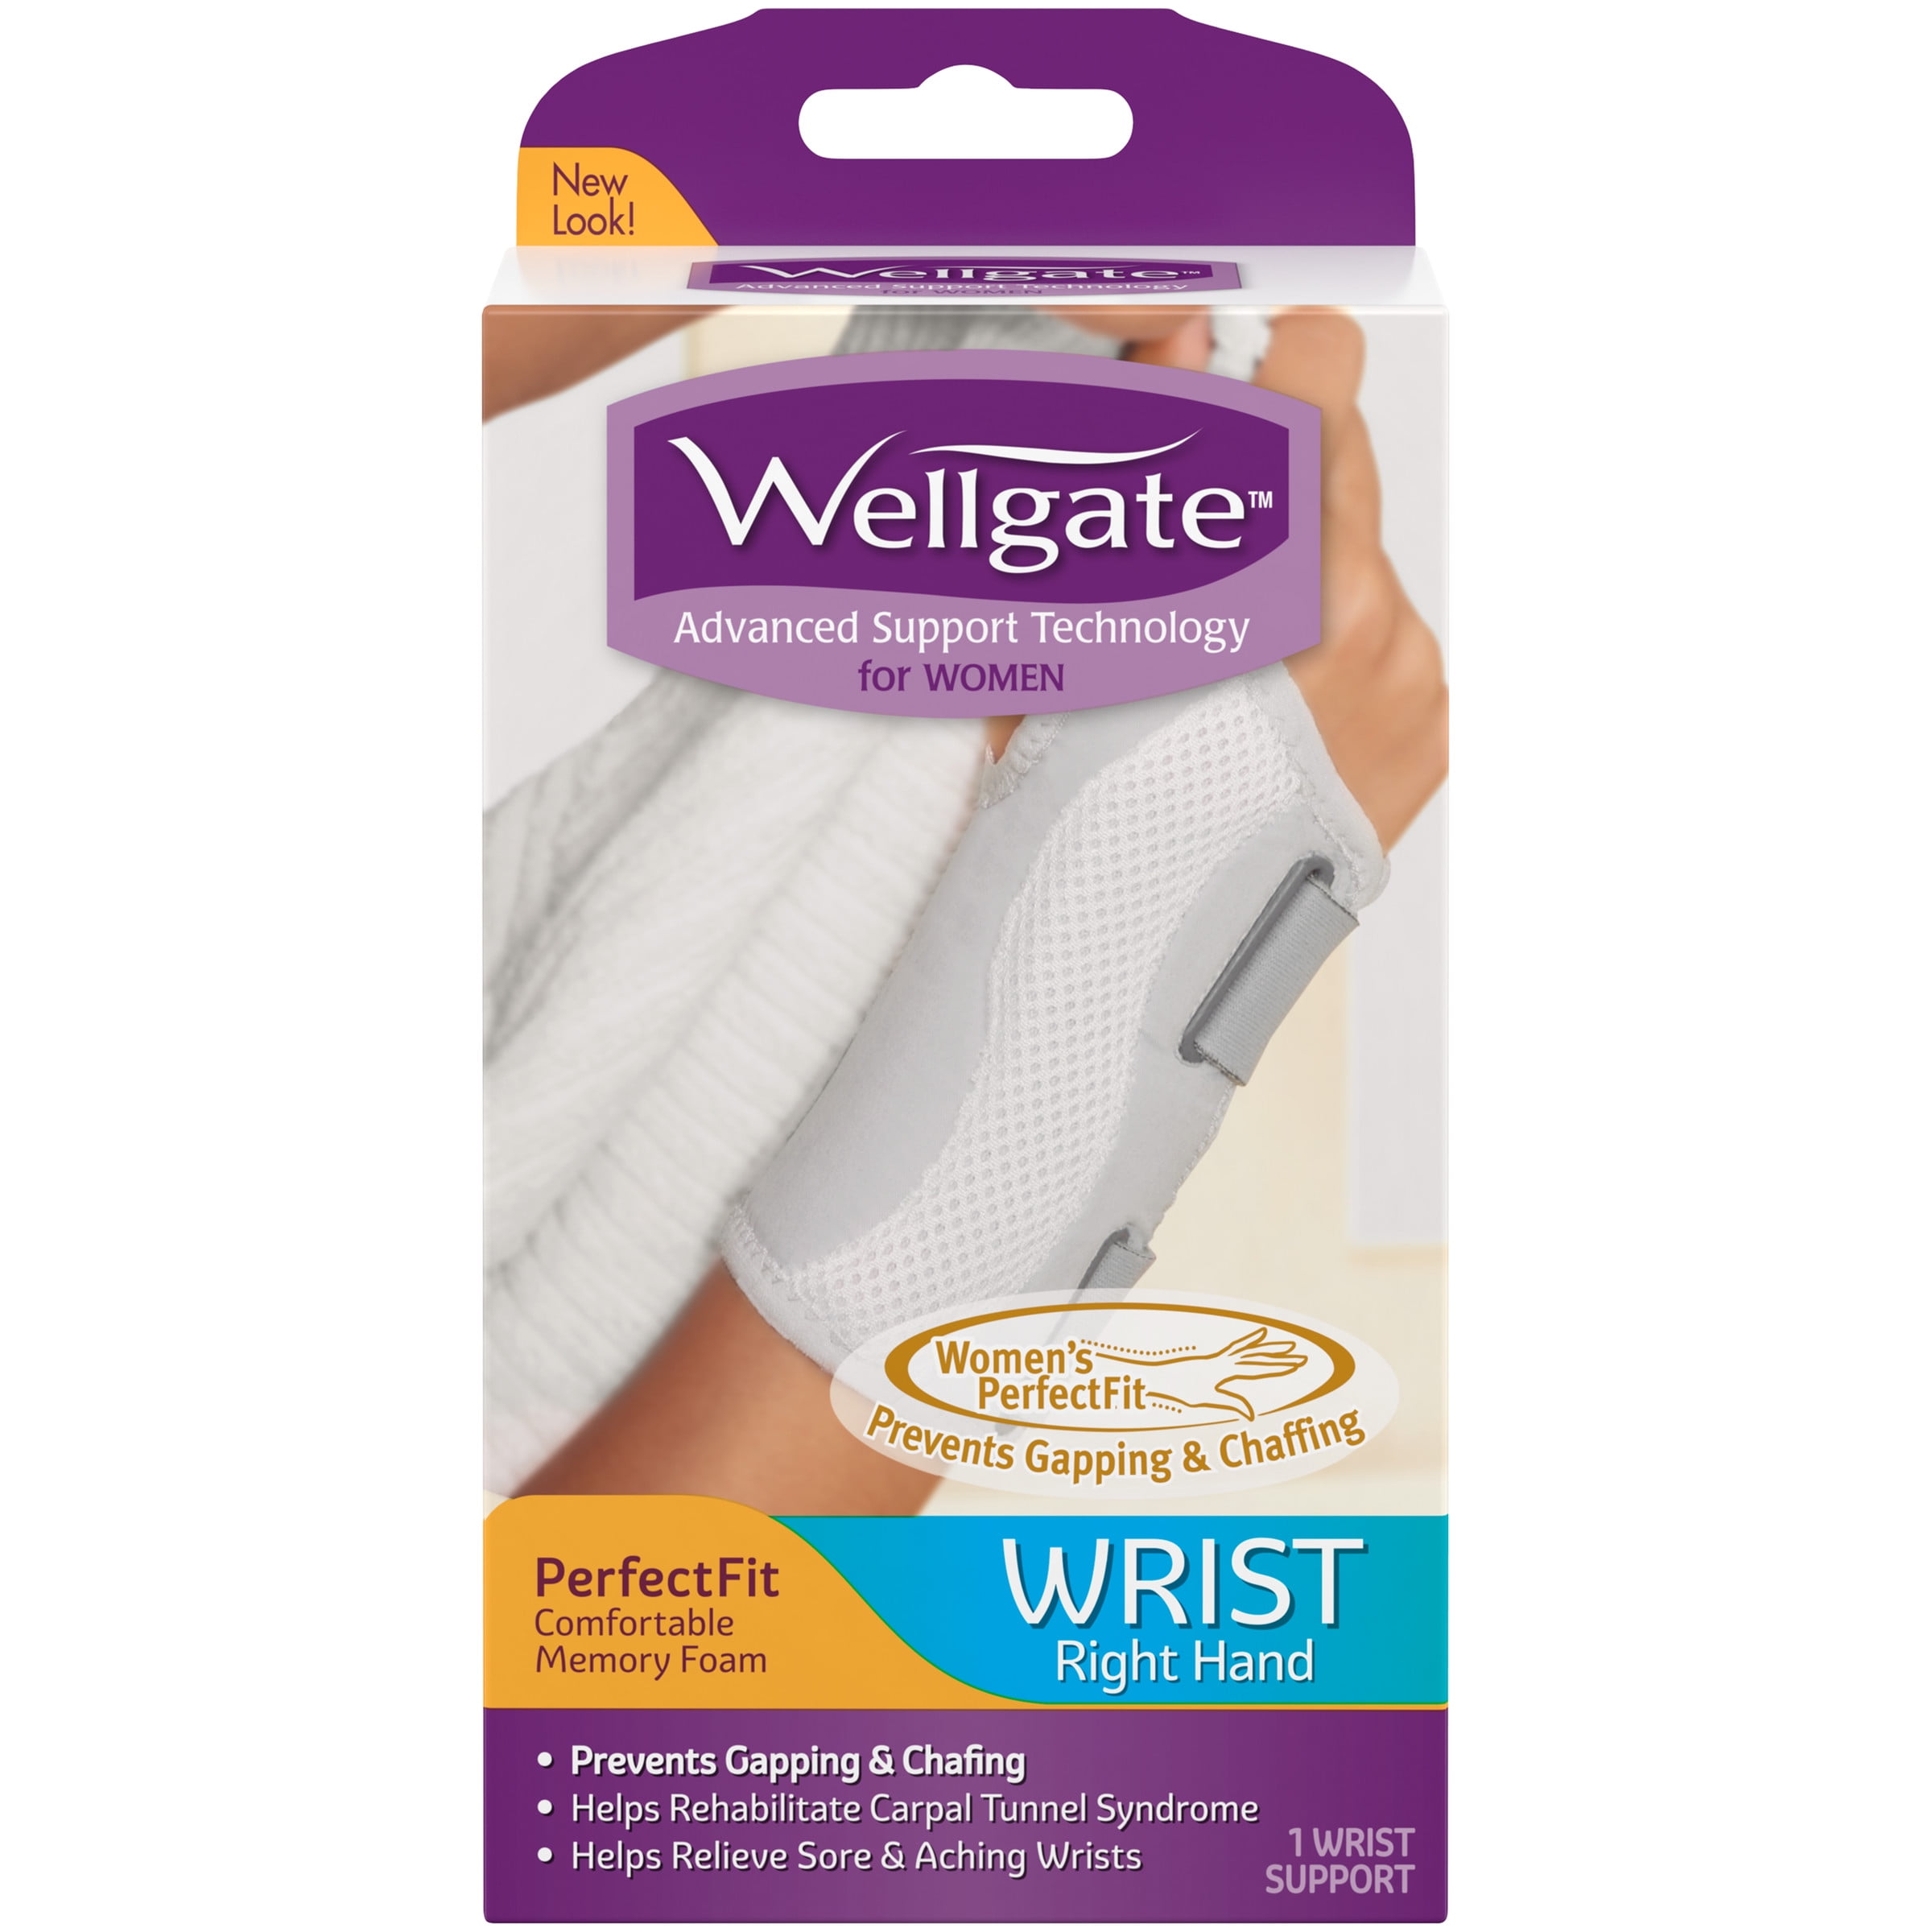 Wellgate for Women, PerfectFit Wrist Brace for Wrist Support